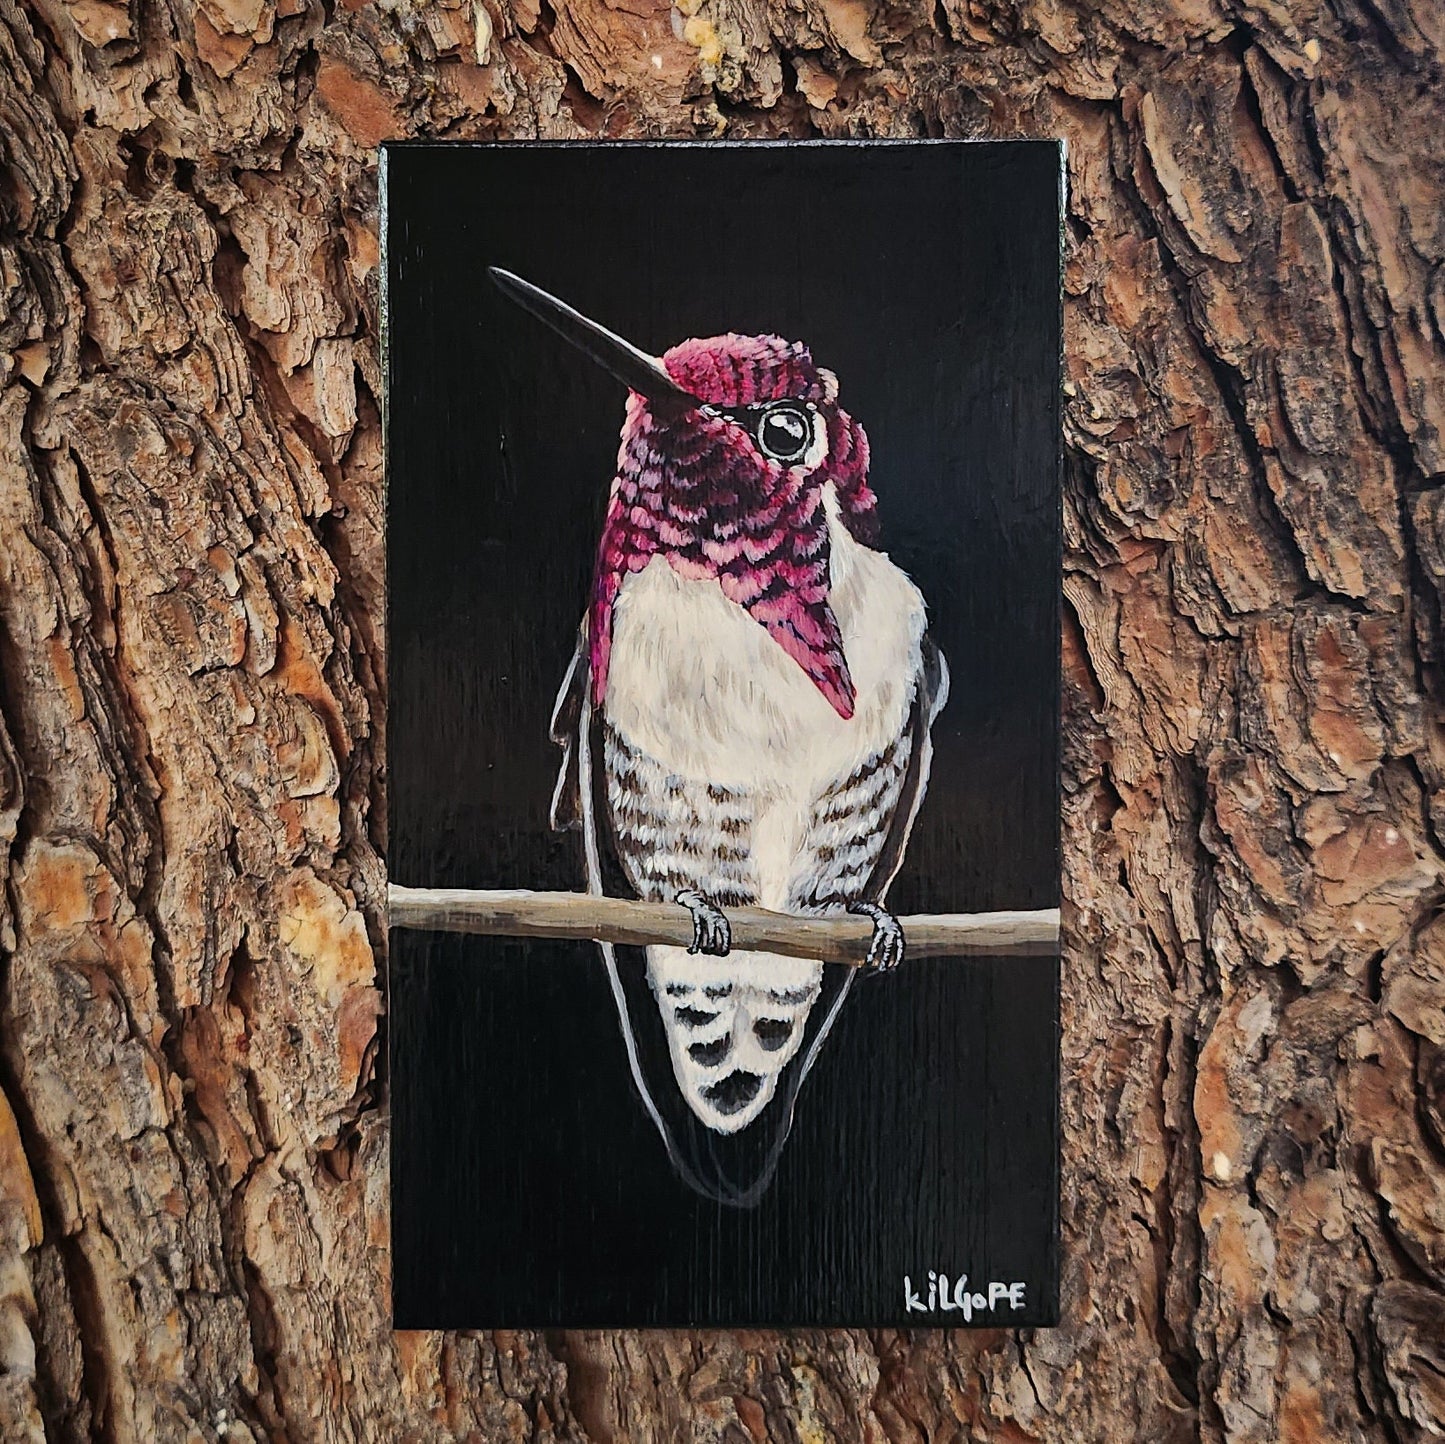 Costa's Hummingbird - Original Acrylic Painting on Bamboo - By Kilgore, Original 3.5" x 6" Acrylic Painting | Hummingbird Artwork